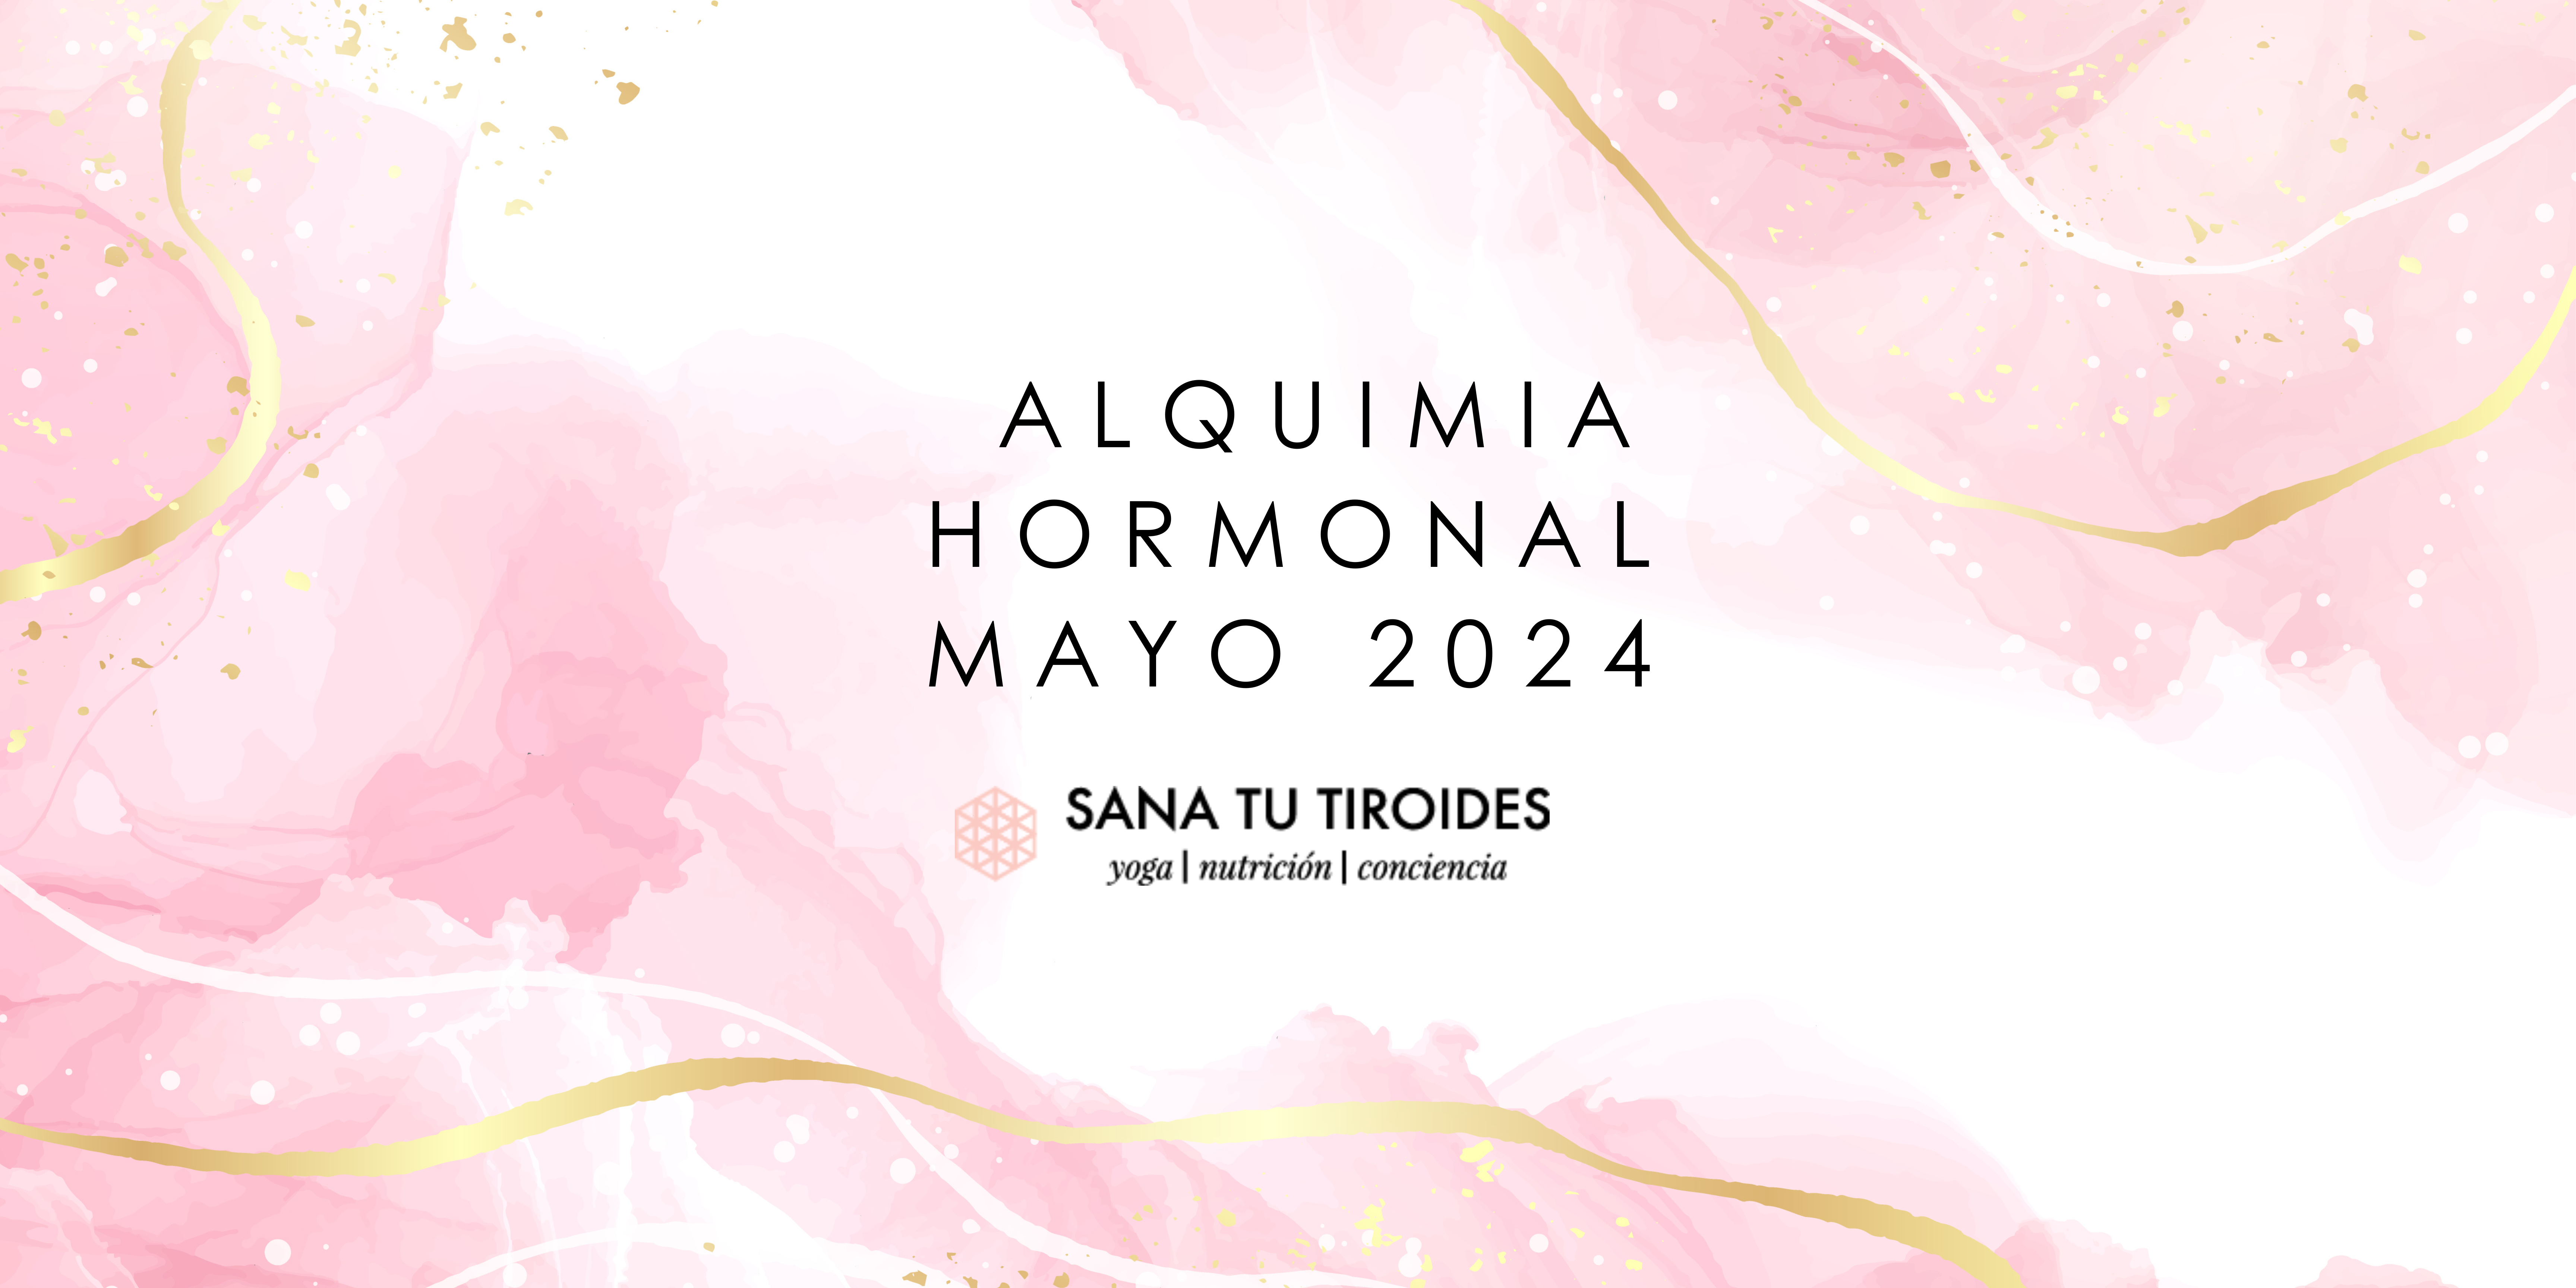 Alquimia hormonal Mayo 2024